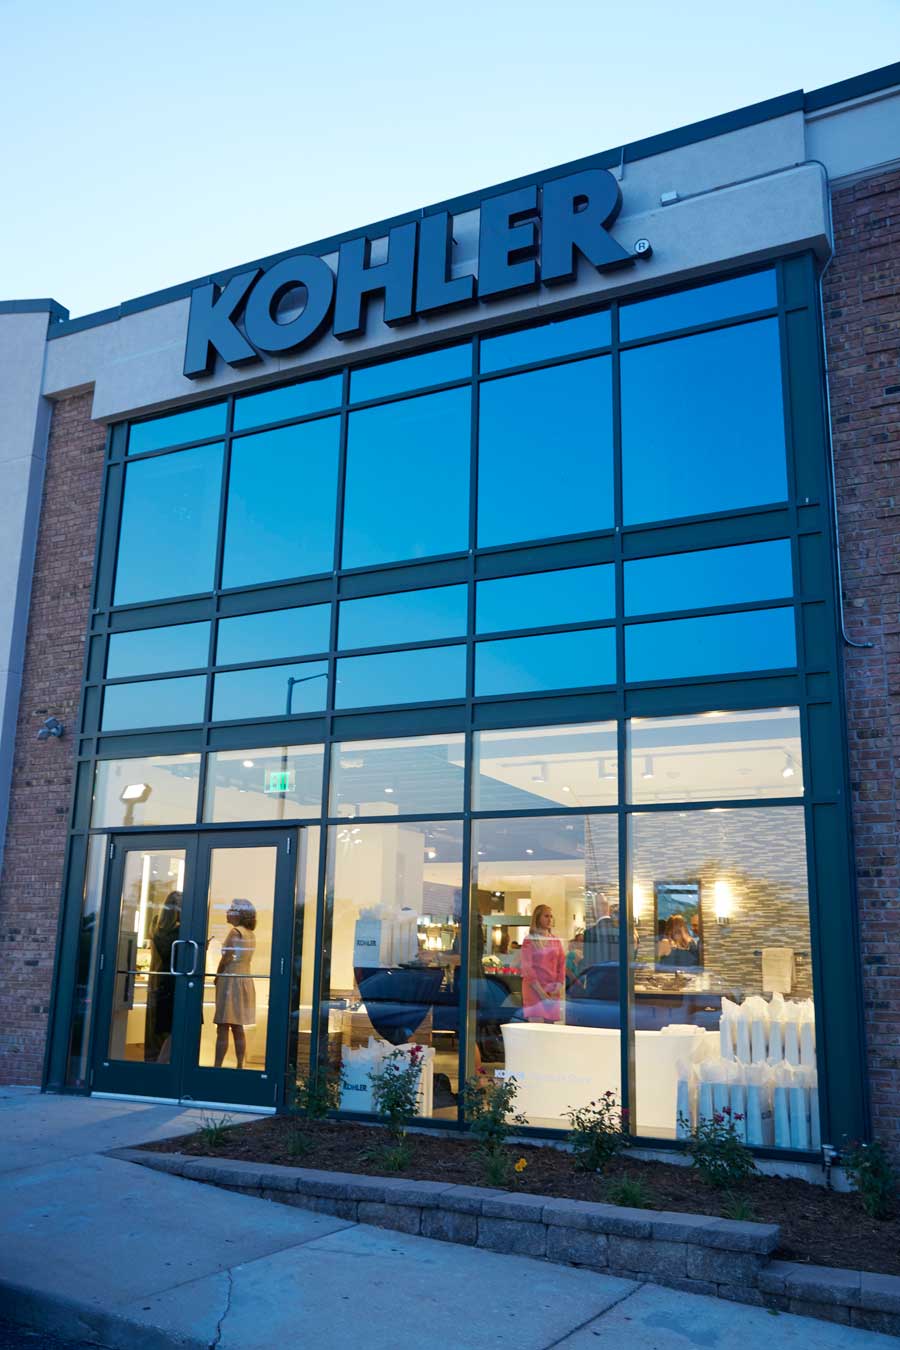 Kohler showroom first to earn USGBC LEED Gold certification